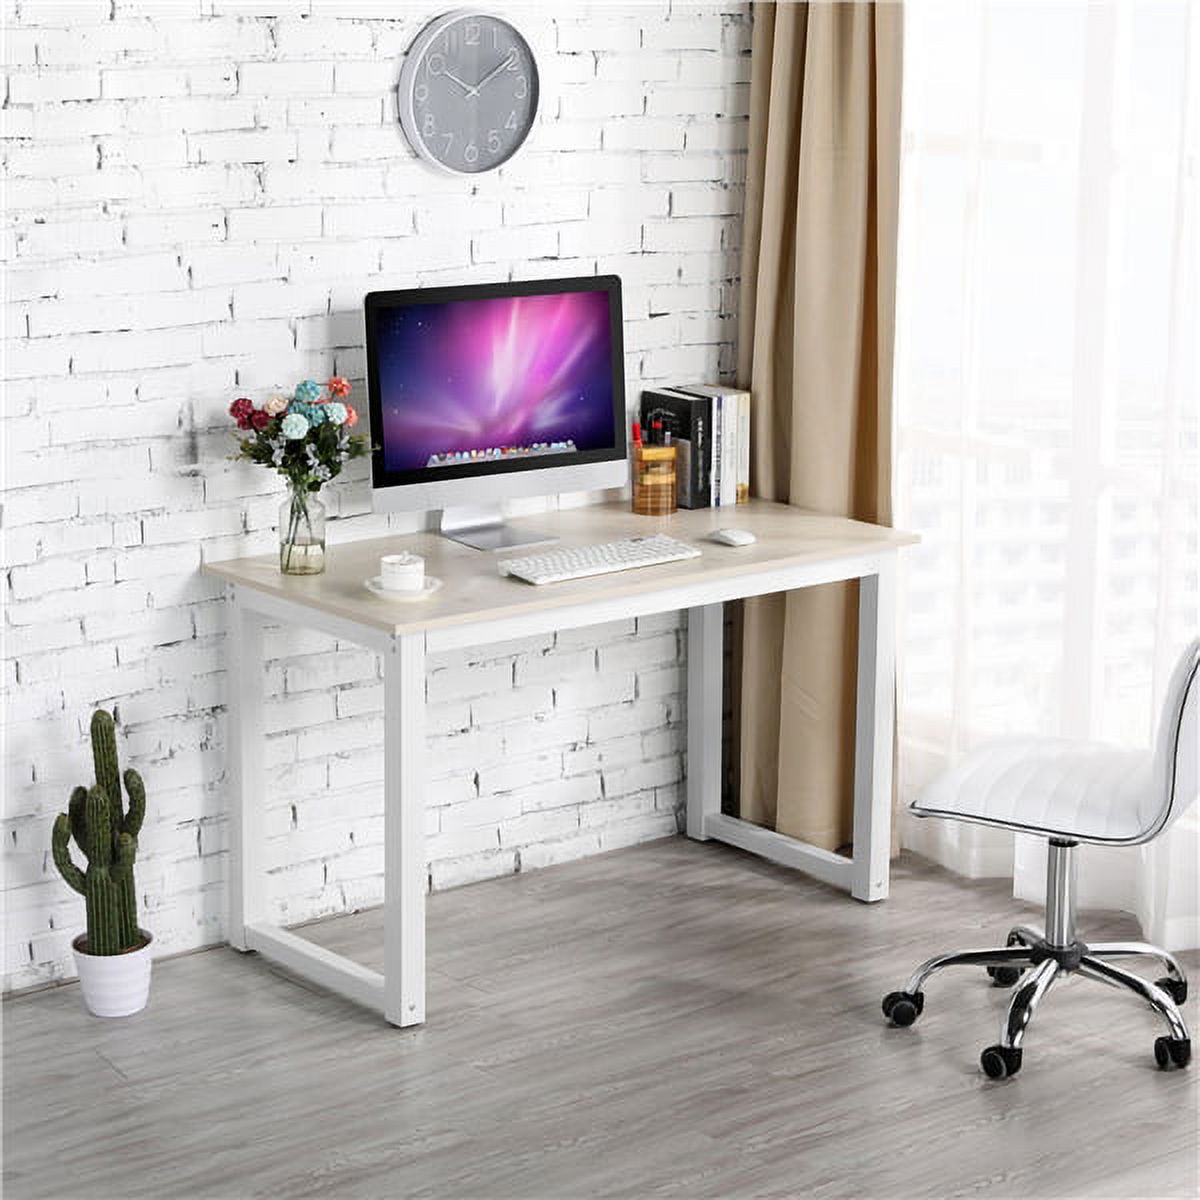 Alden Design Modern Home Office Computer Desk with White Metal Frame and Light Walnut Wood Top - image 5 of 10